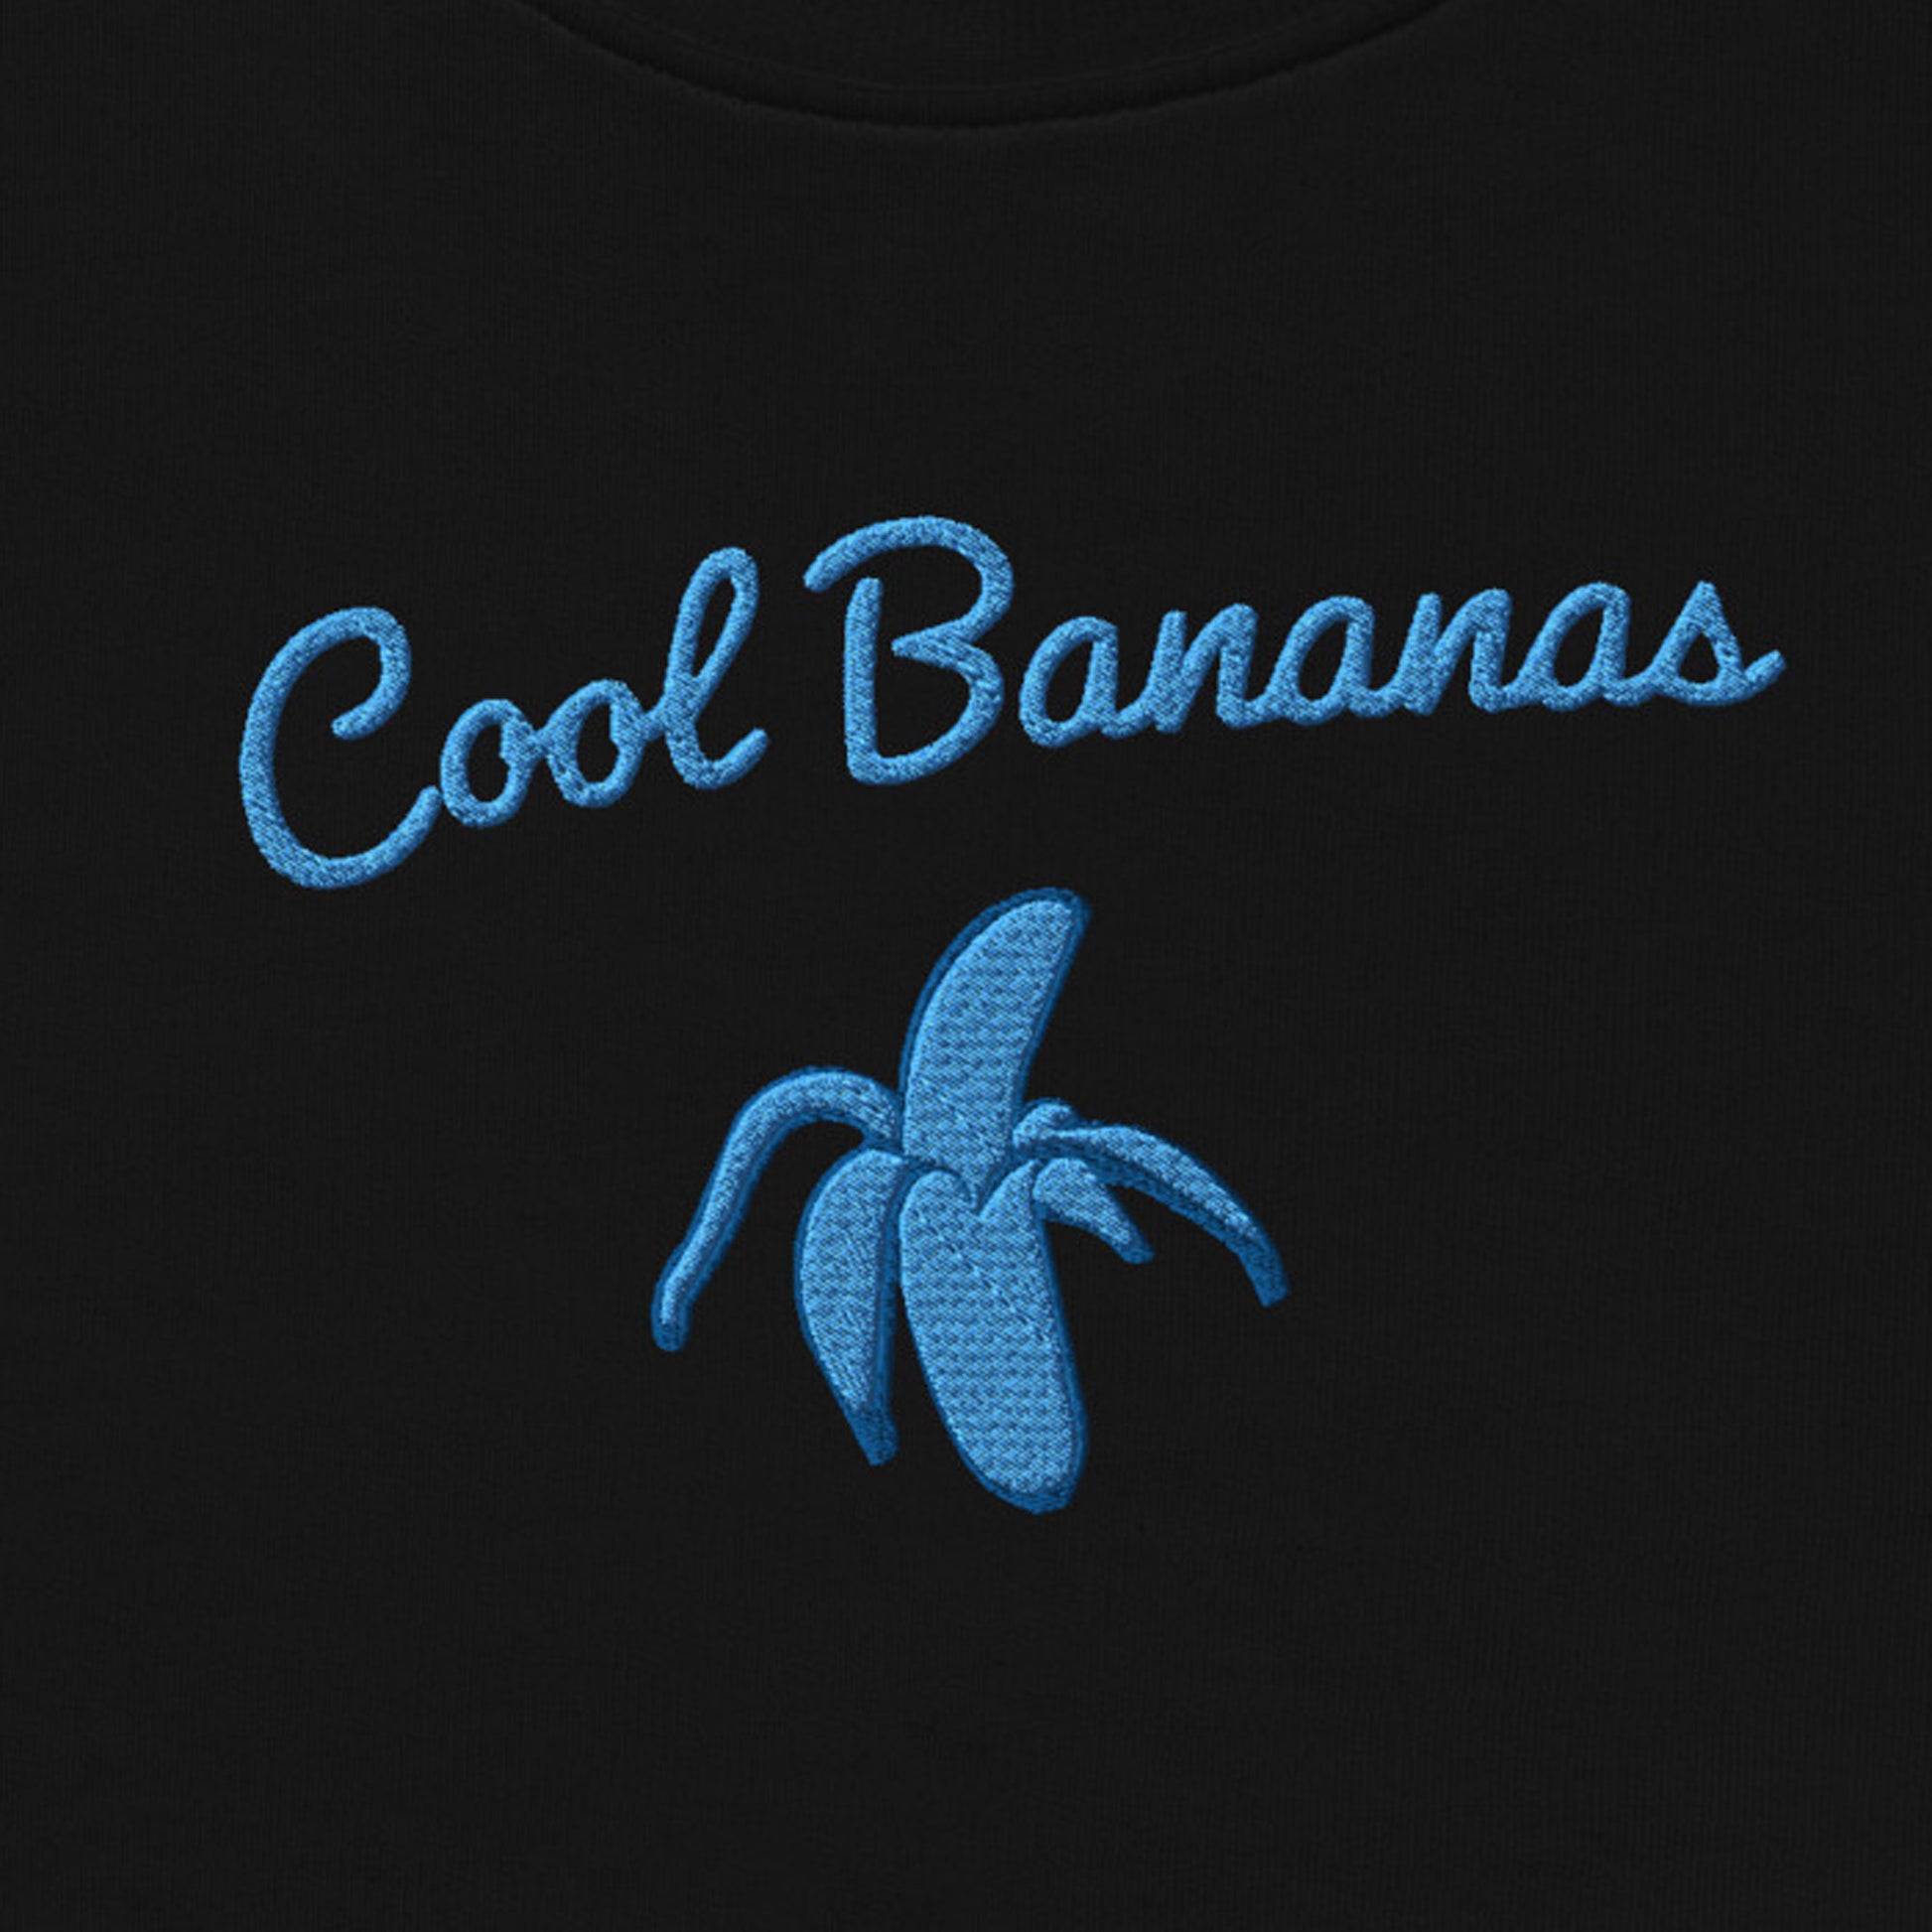 Cool Bananas - embroidered organic sweatshirt.